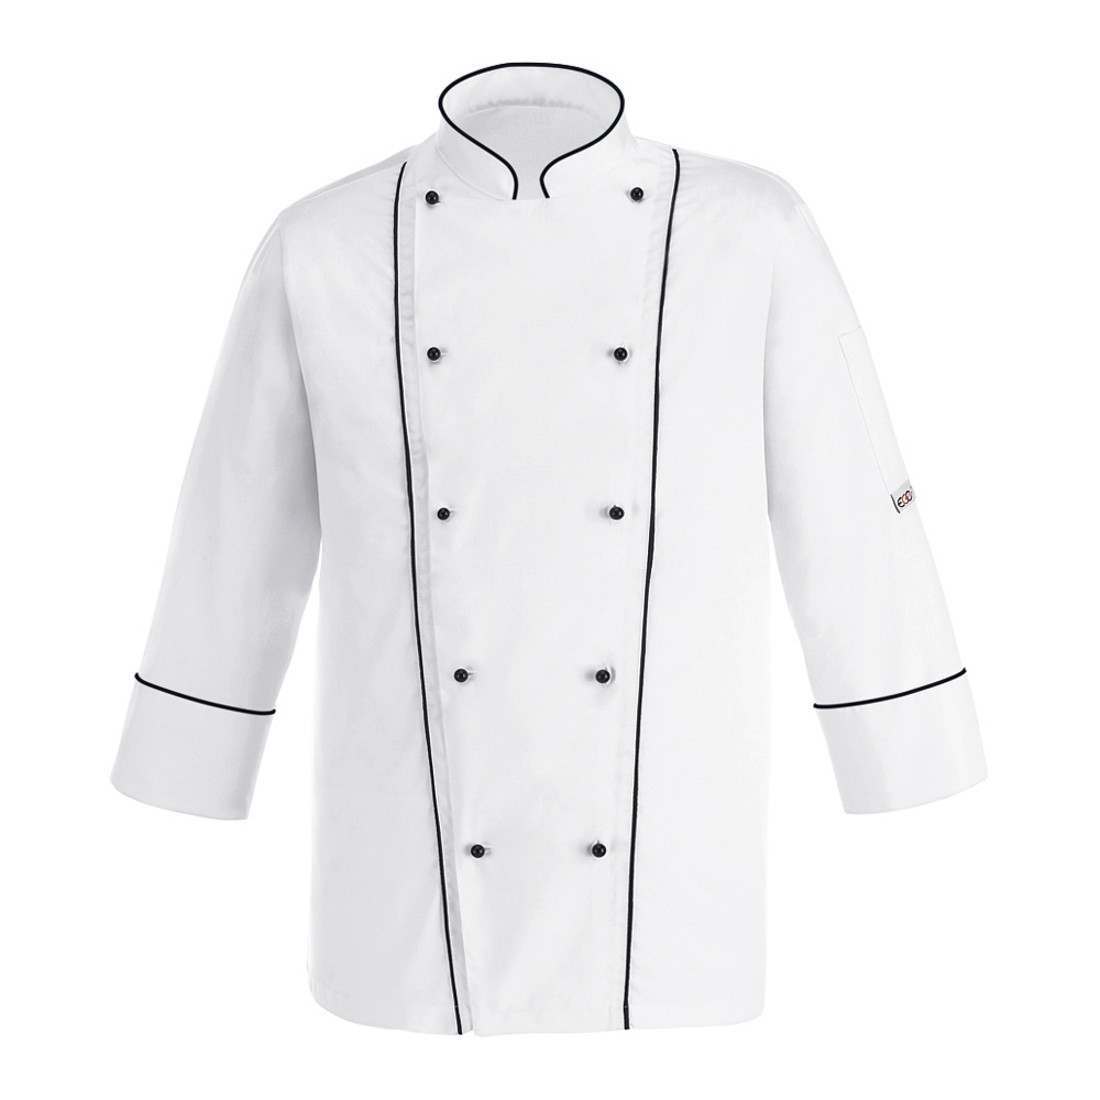 Profile Chef's Jacket - Safetywear